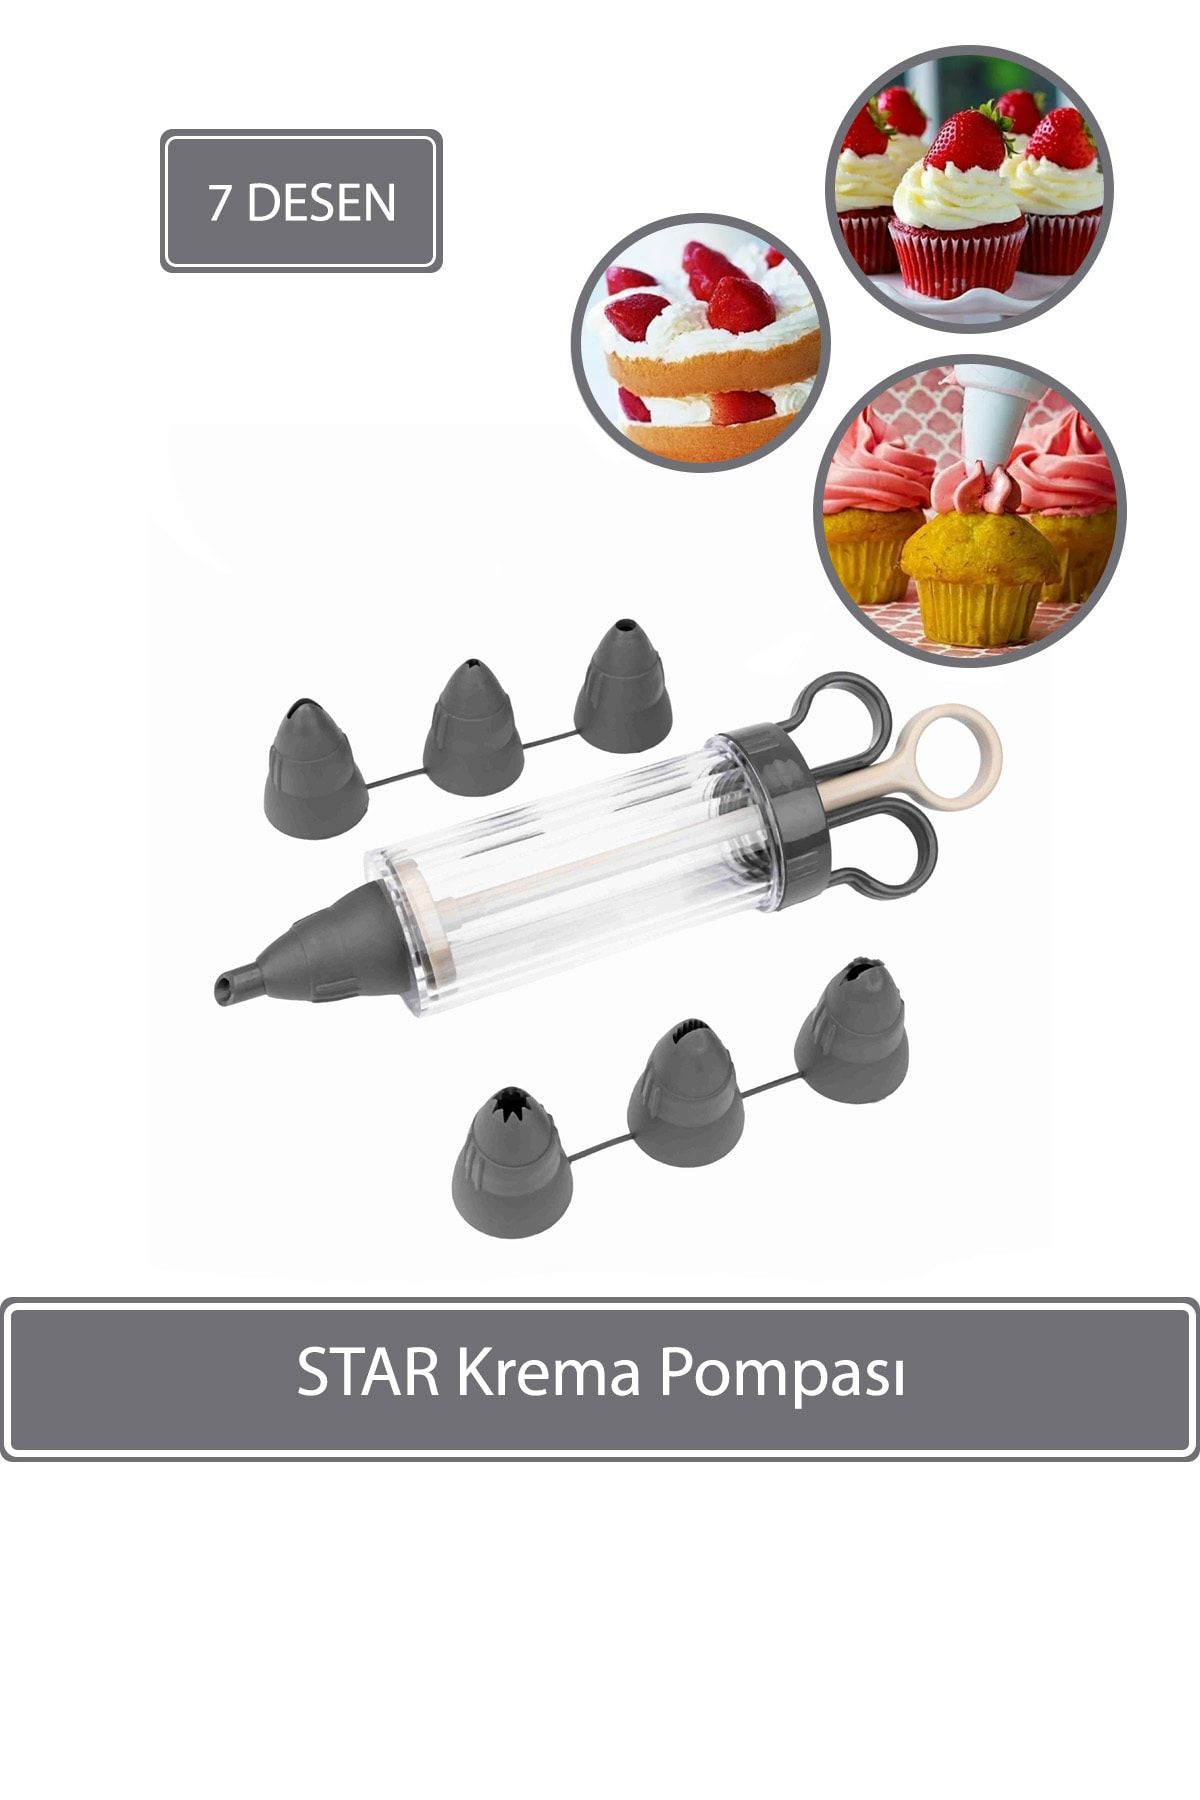 Sunplast Star Krema Pompası